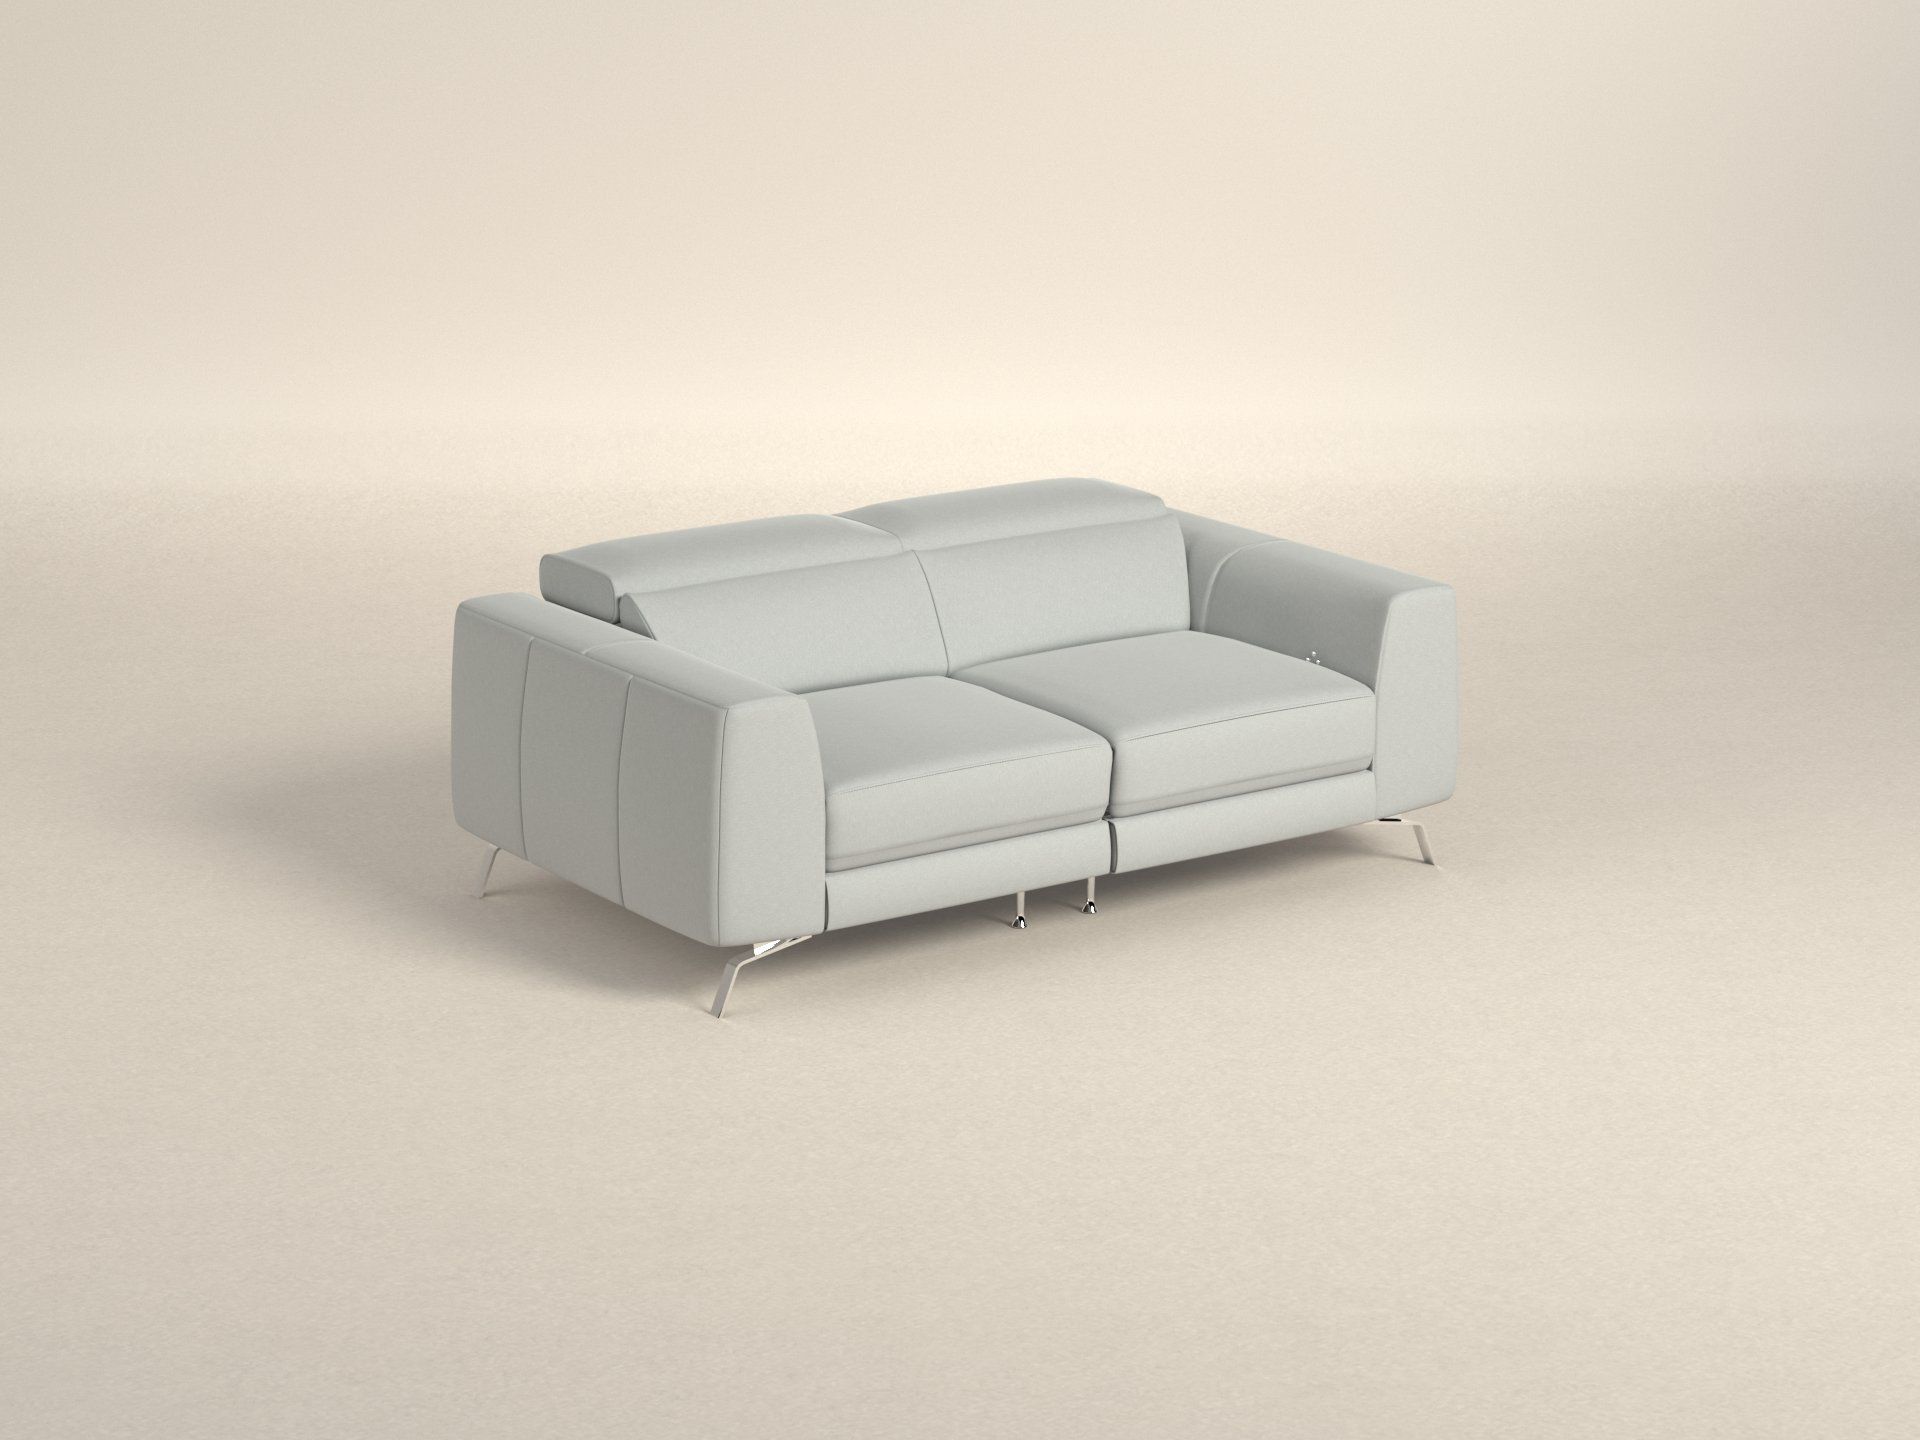 Preset default image - Pensiero Love seat - Fabric